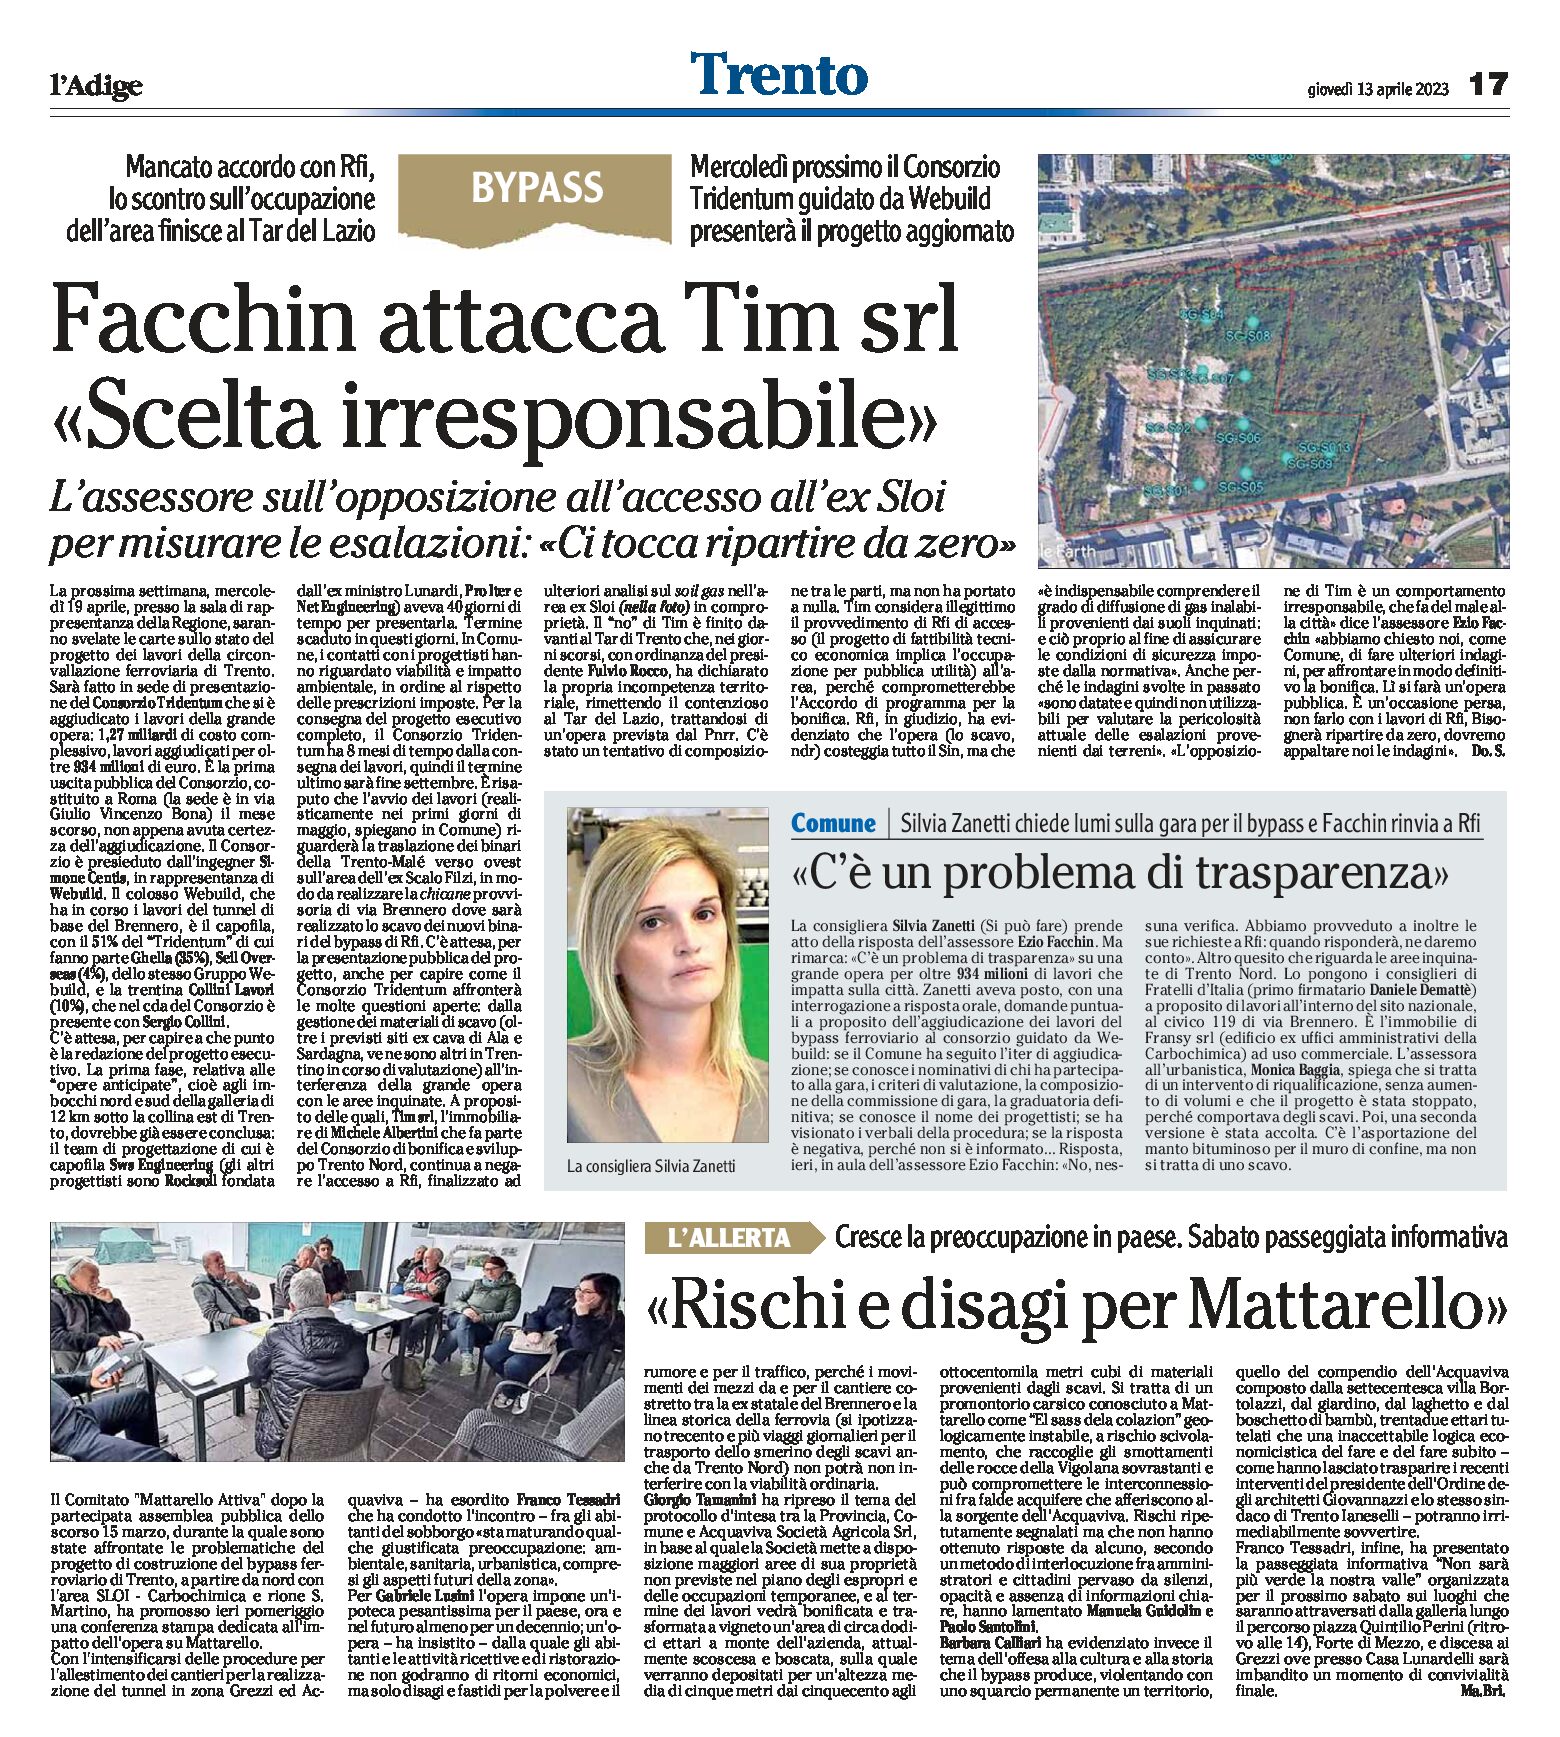 Trento, bypass: Facchin attacca Tim srl “scelta irresponsabile”